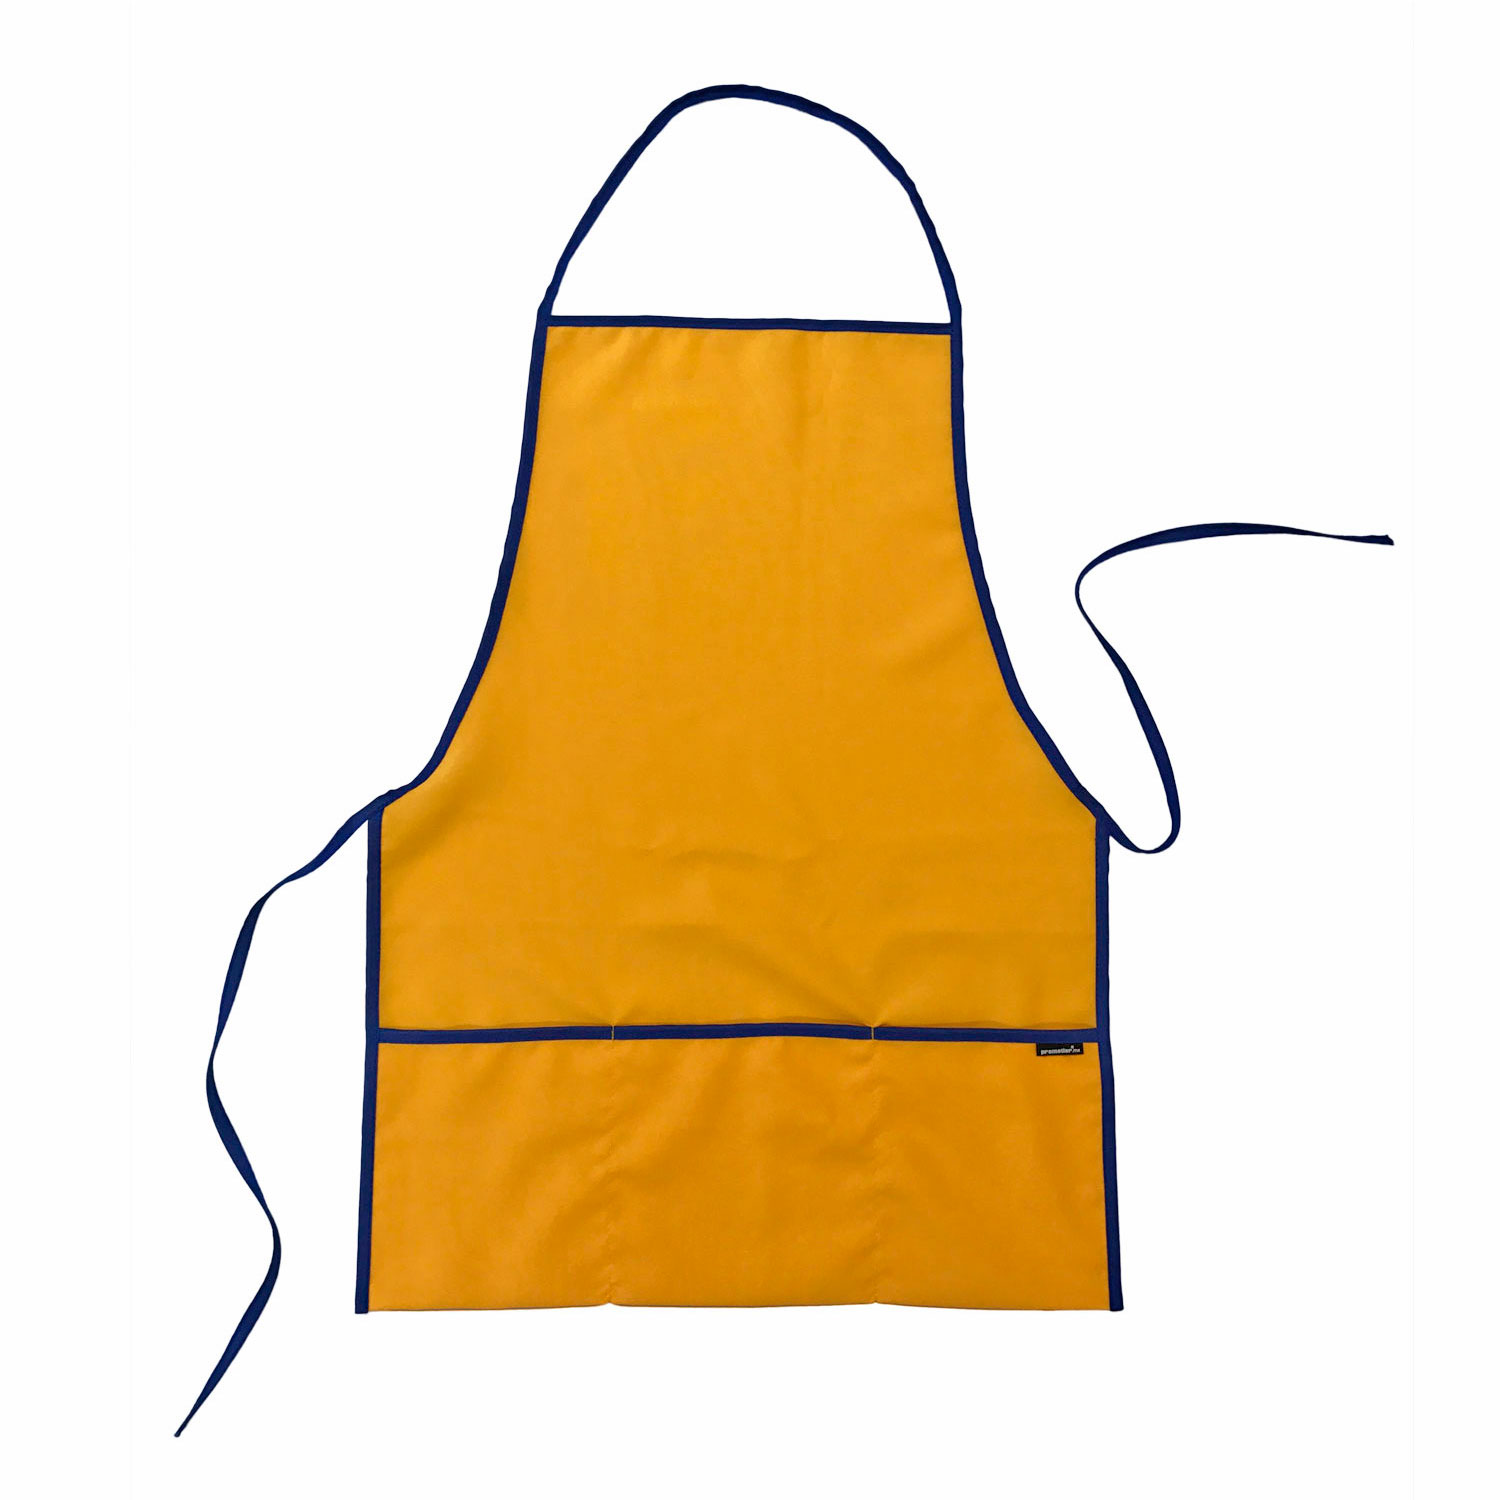 MANDILTRIPLEBOLSA, Mandil de Tergal de tres bolsas de 48 x18 cm y con bies alrededor (a elegir)